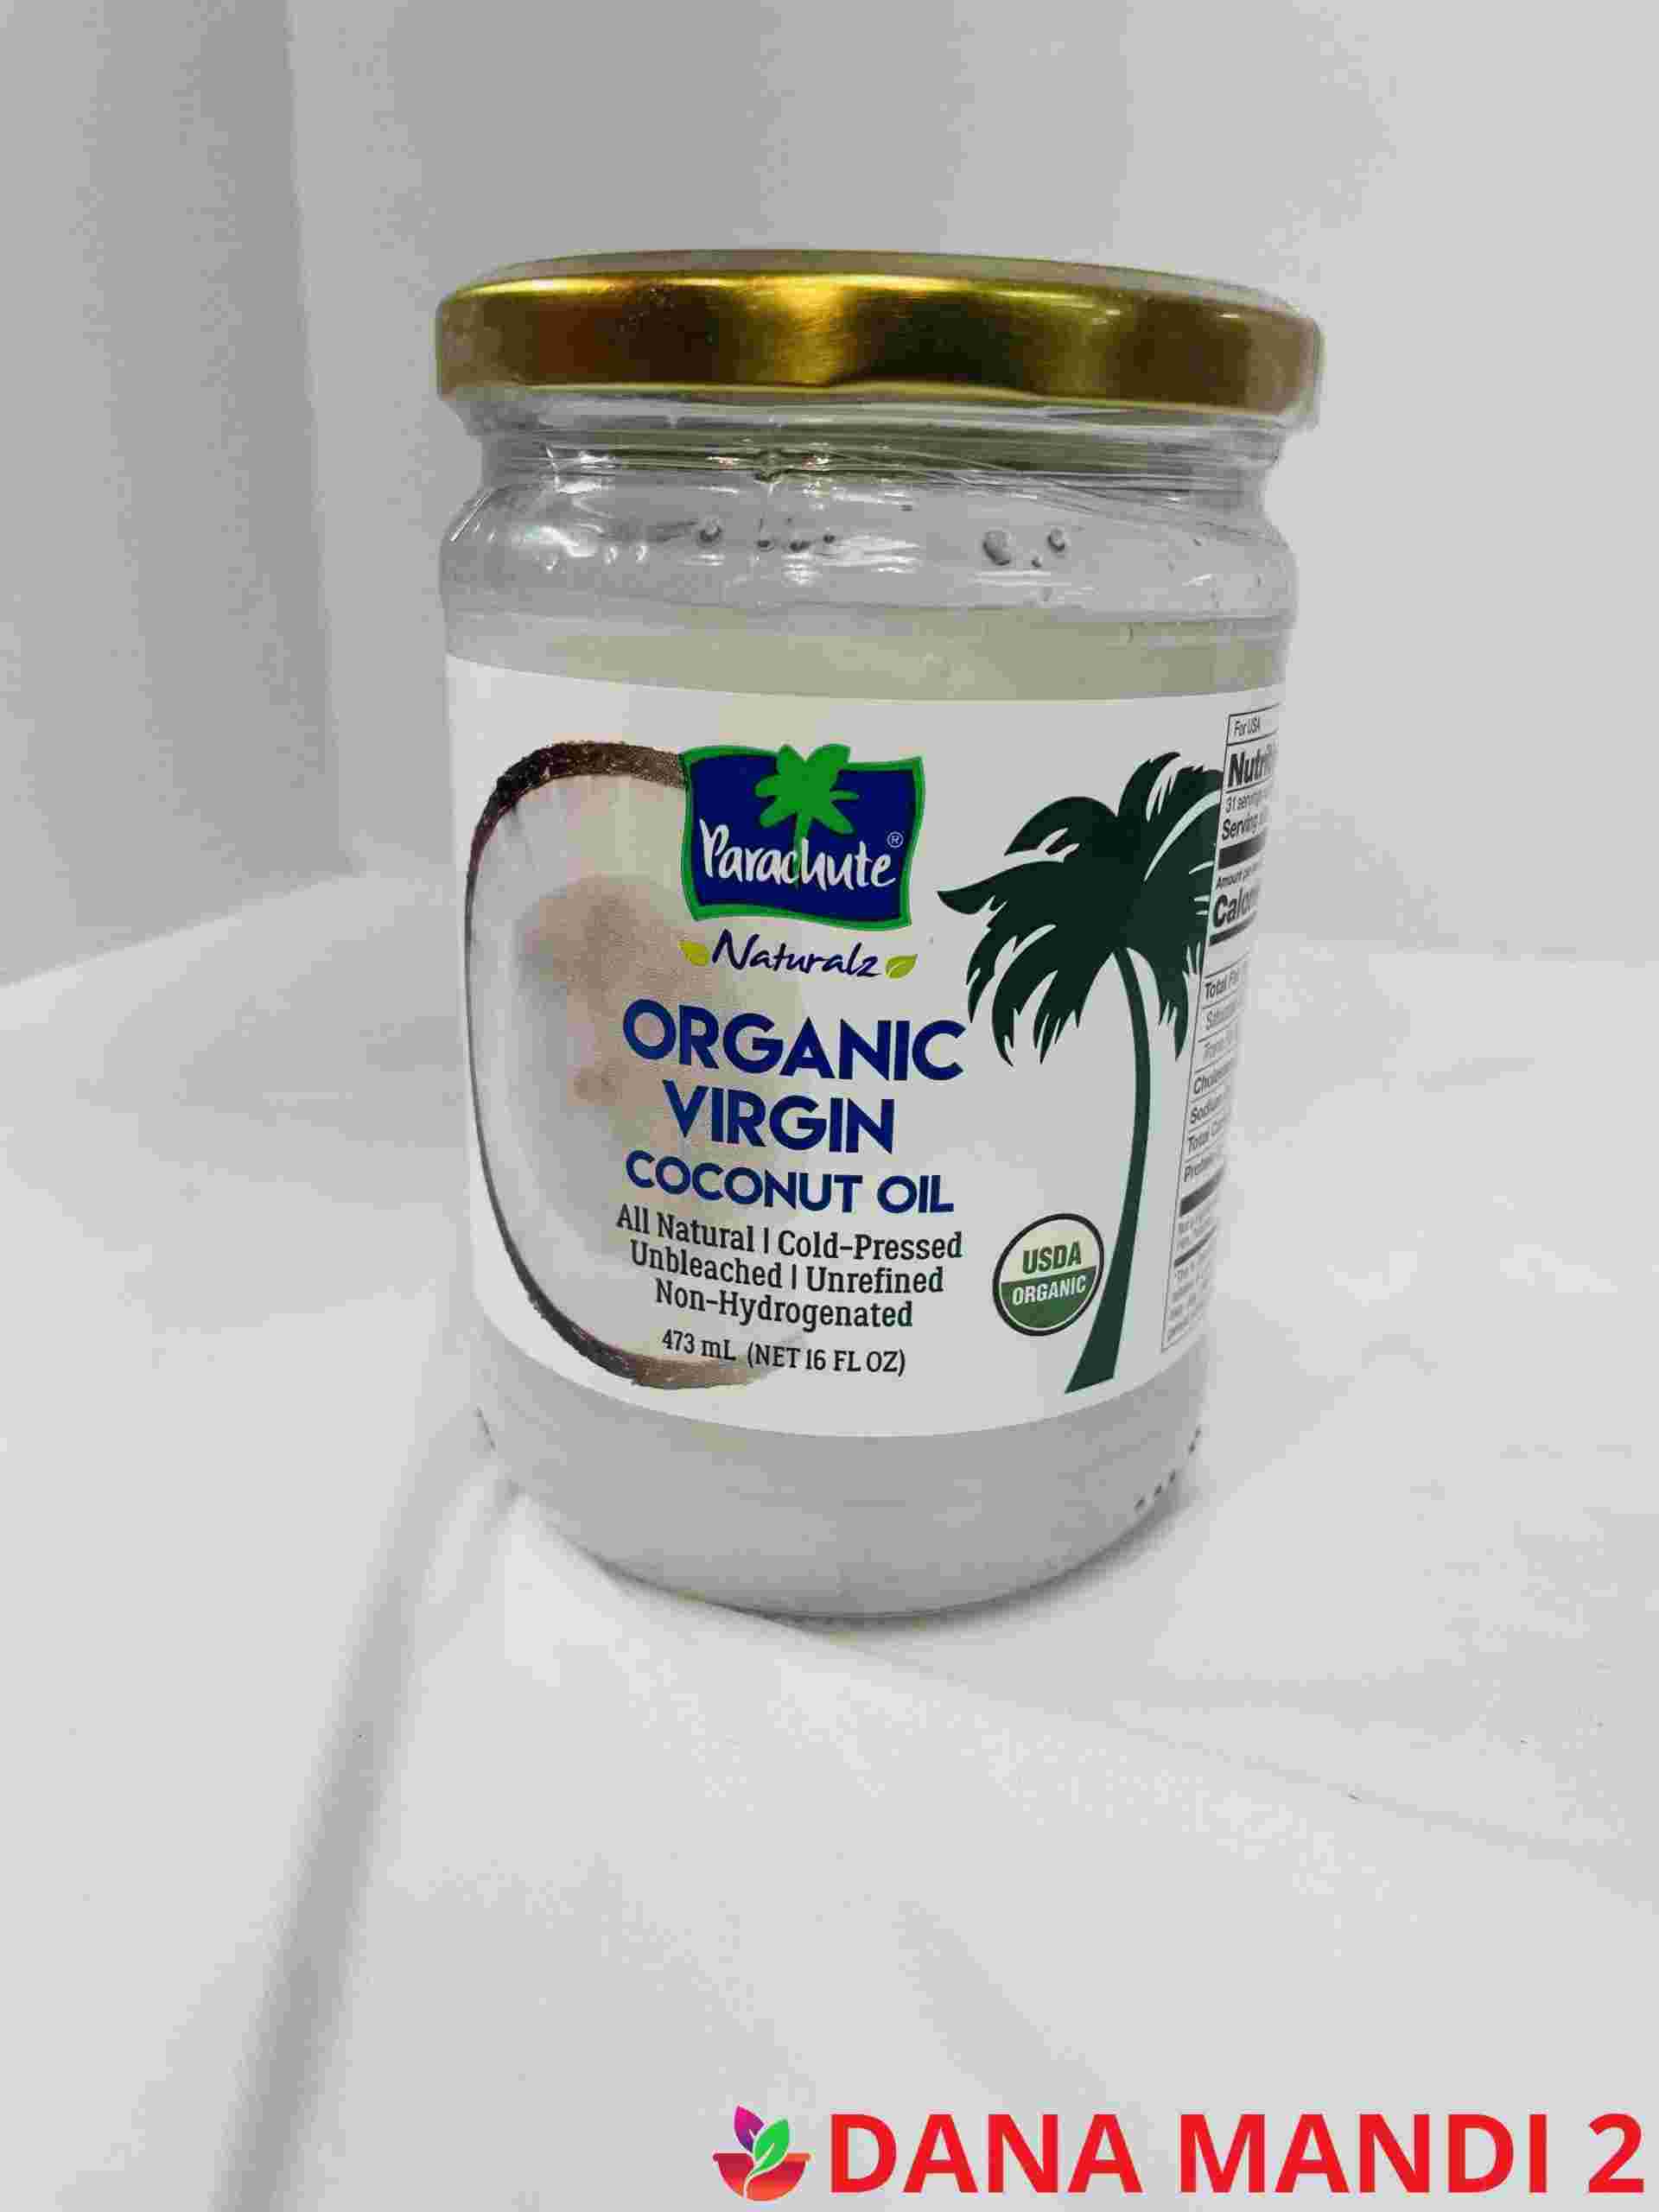 Parachute Organic Virgin Coconut Oil